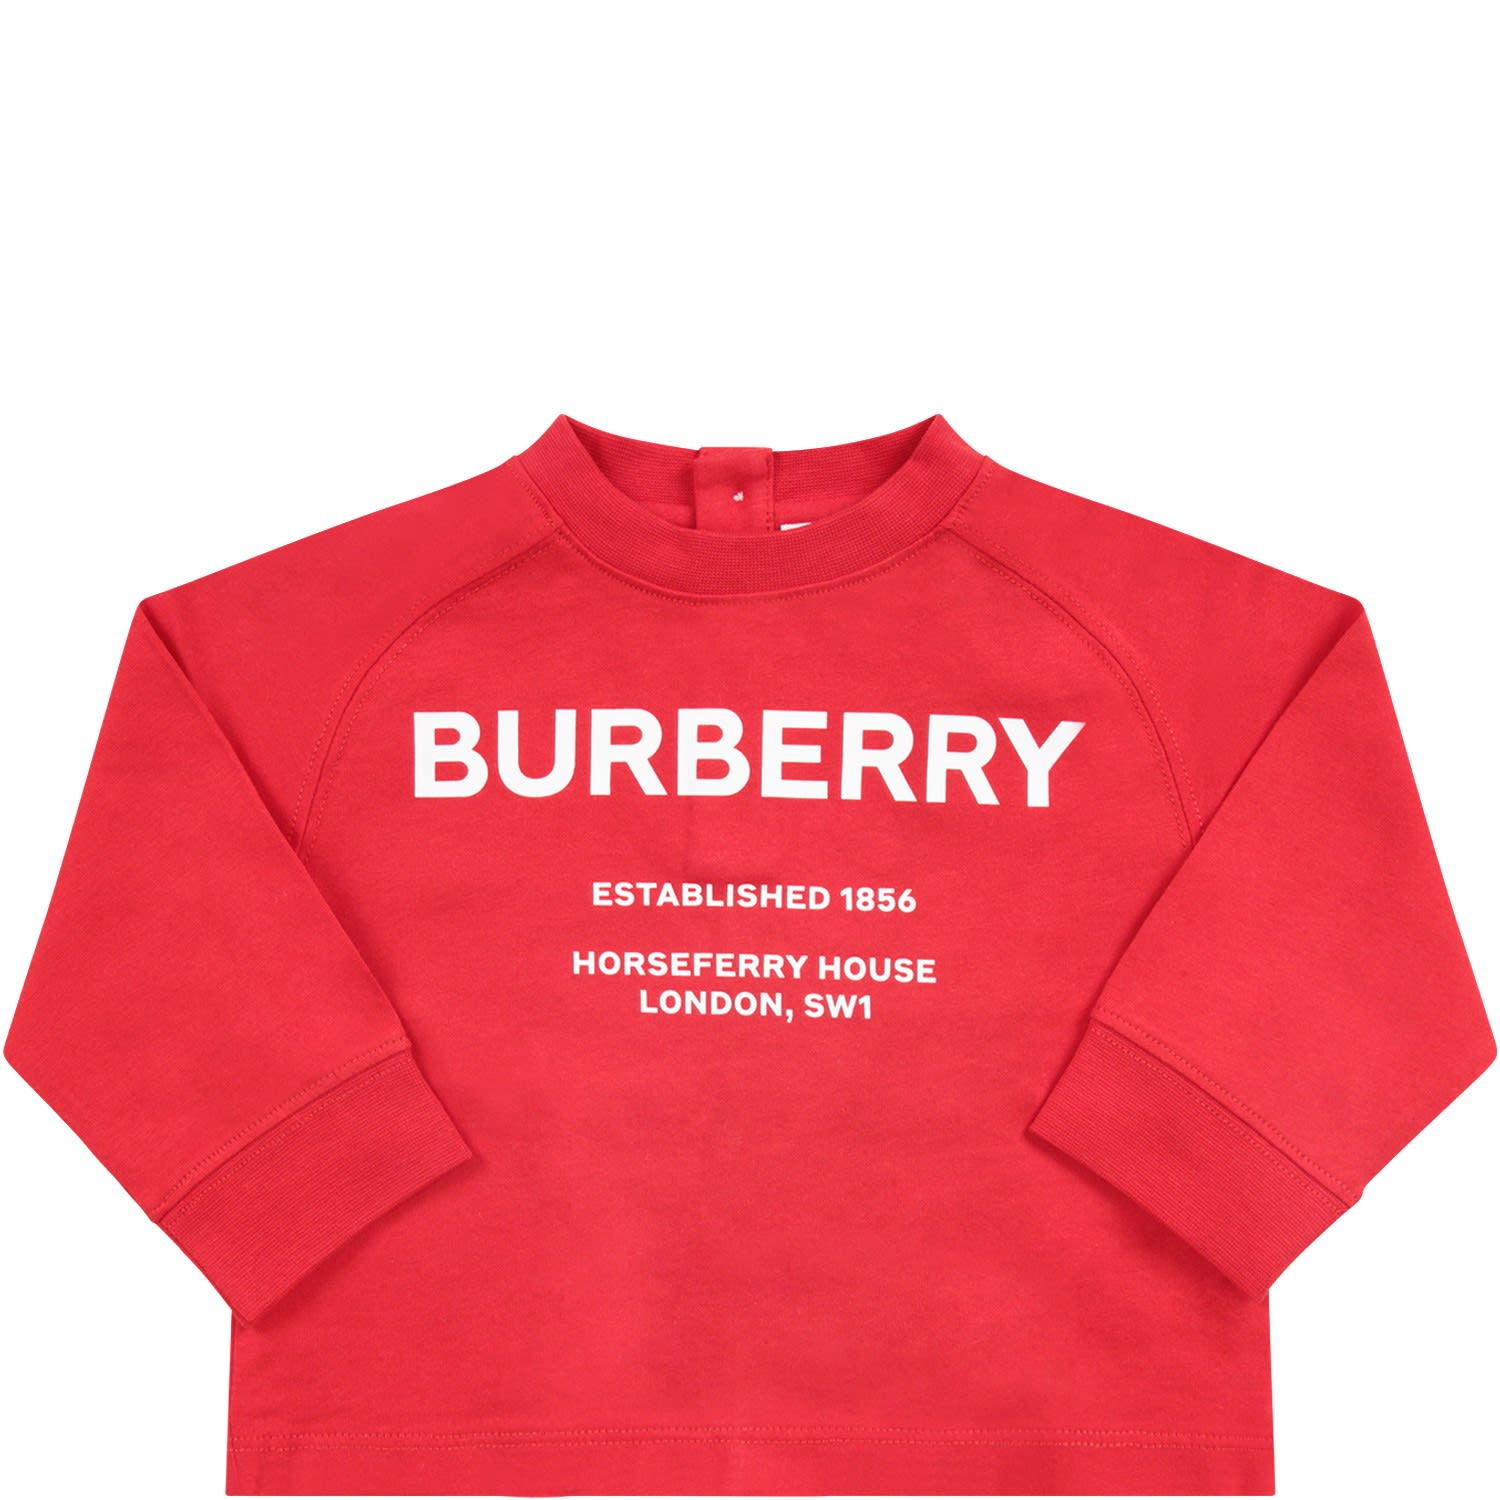 burberry t shirt price